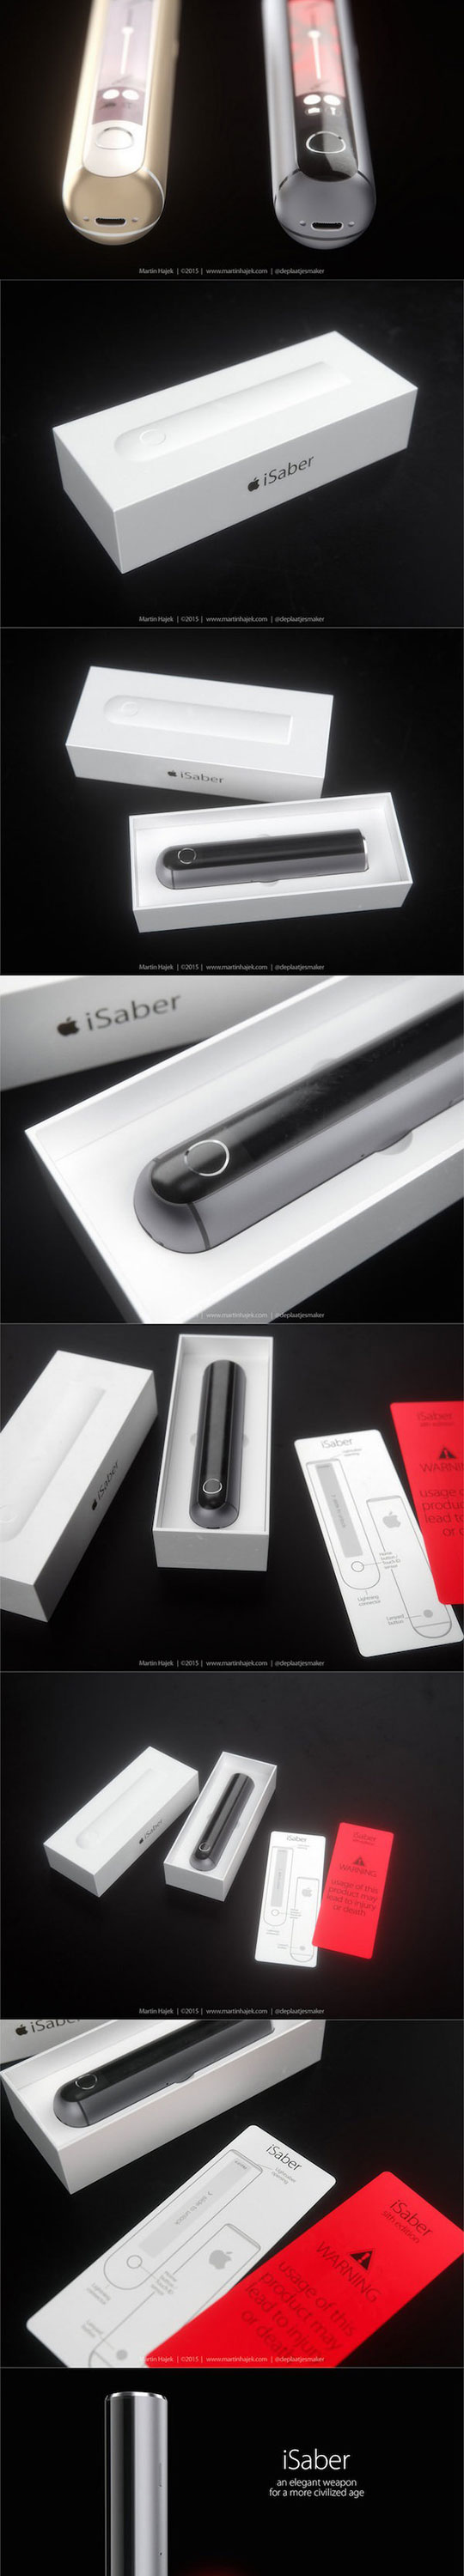 cool-Apple-lightsaber-iSaber-prototype